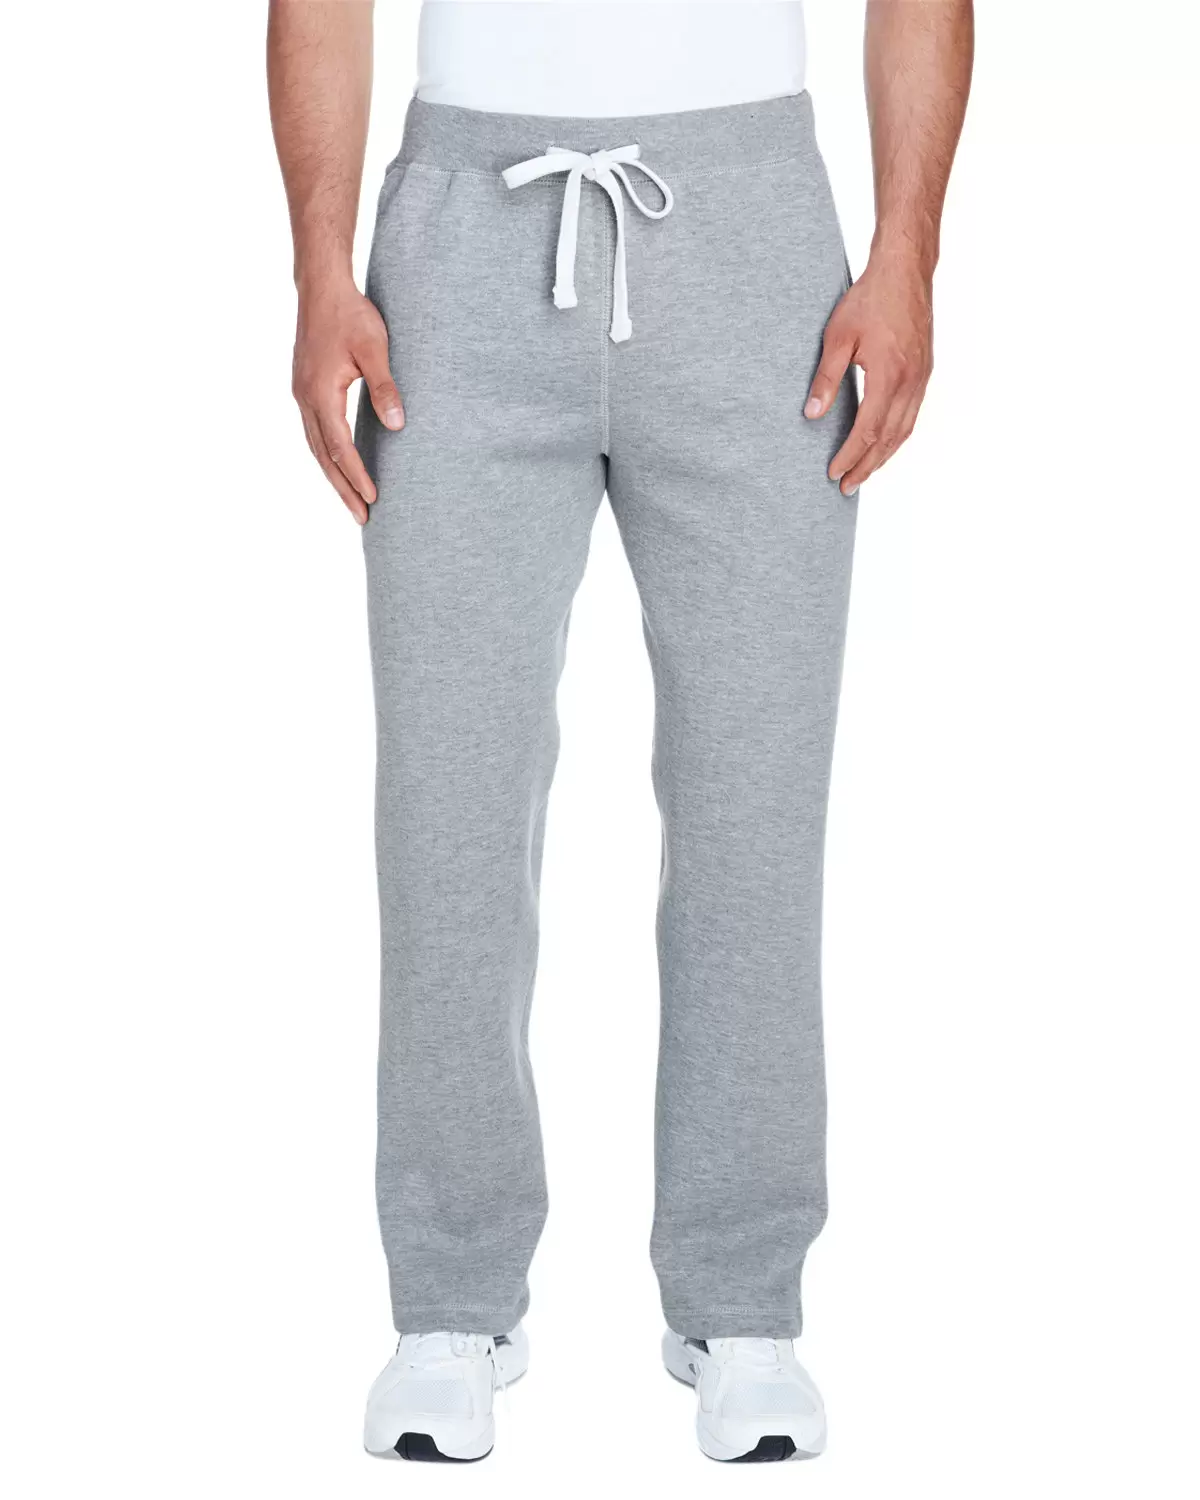 J. America - Premium Open Bottom Sweatpants - 8992 - From $21.49